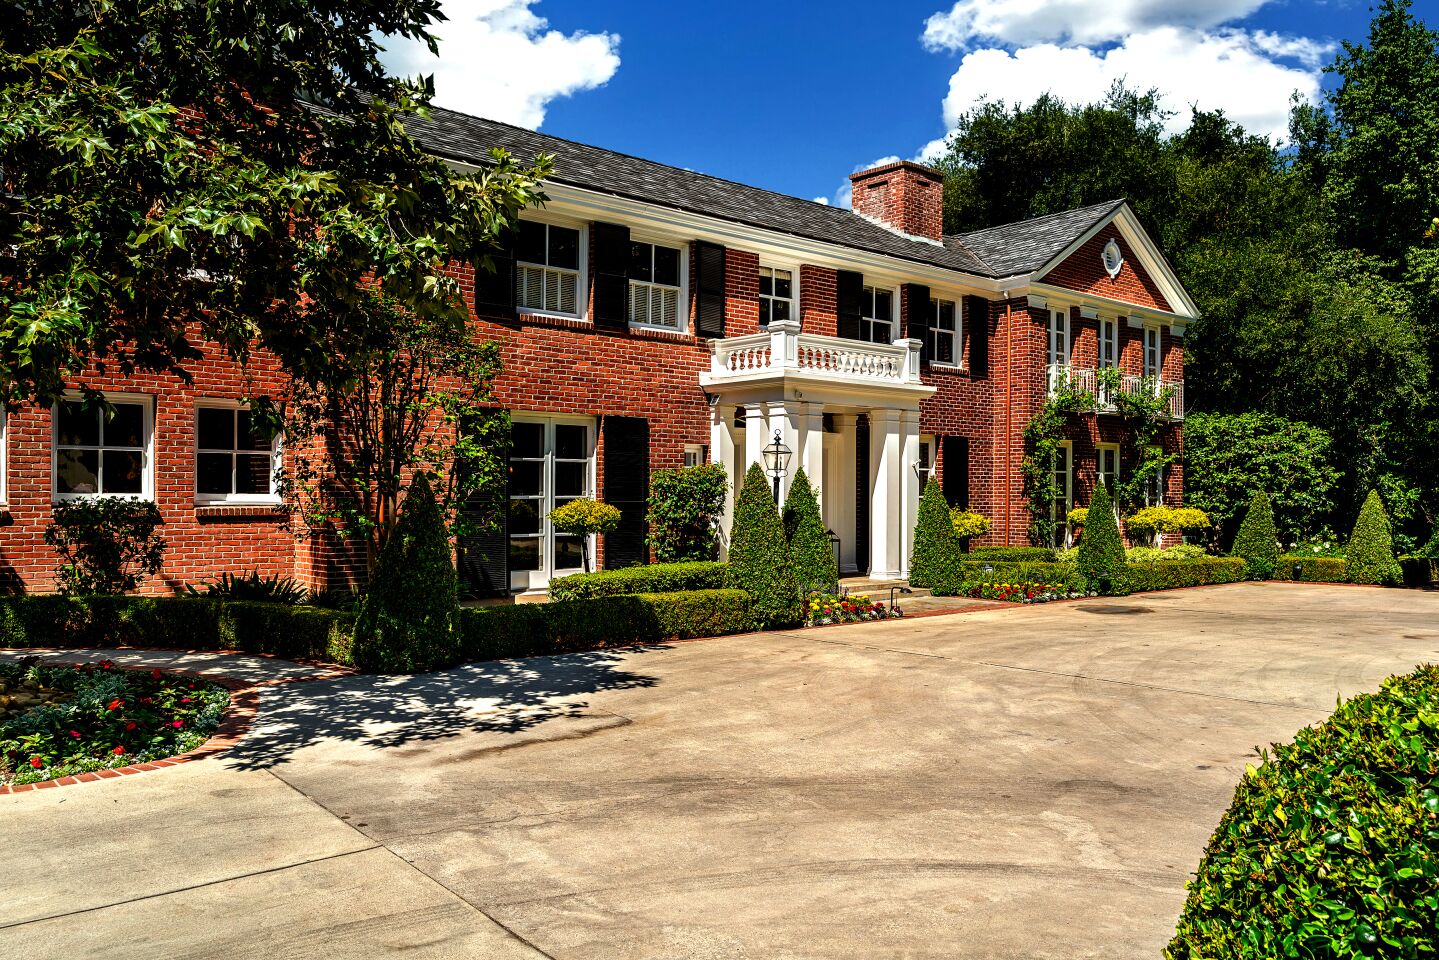 The 1928 Colonial estate in La Cañada Flintridge was designed by architect Myron Hunt.